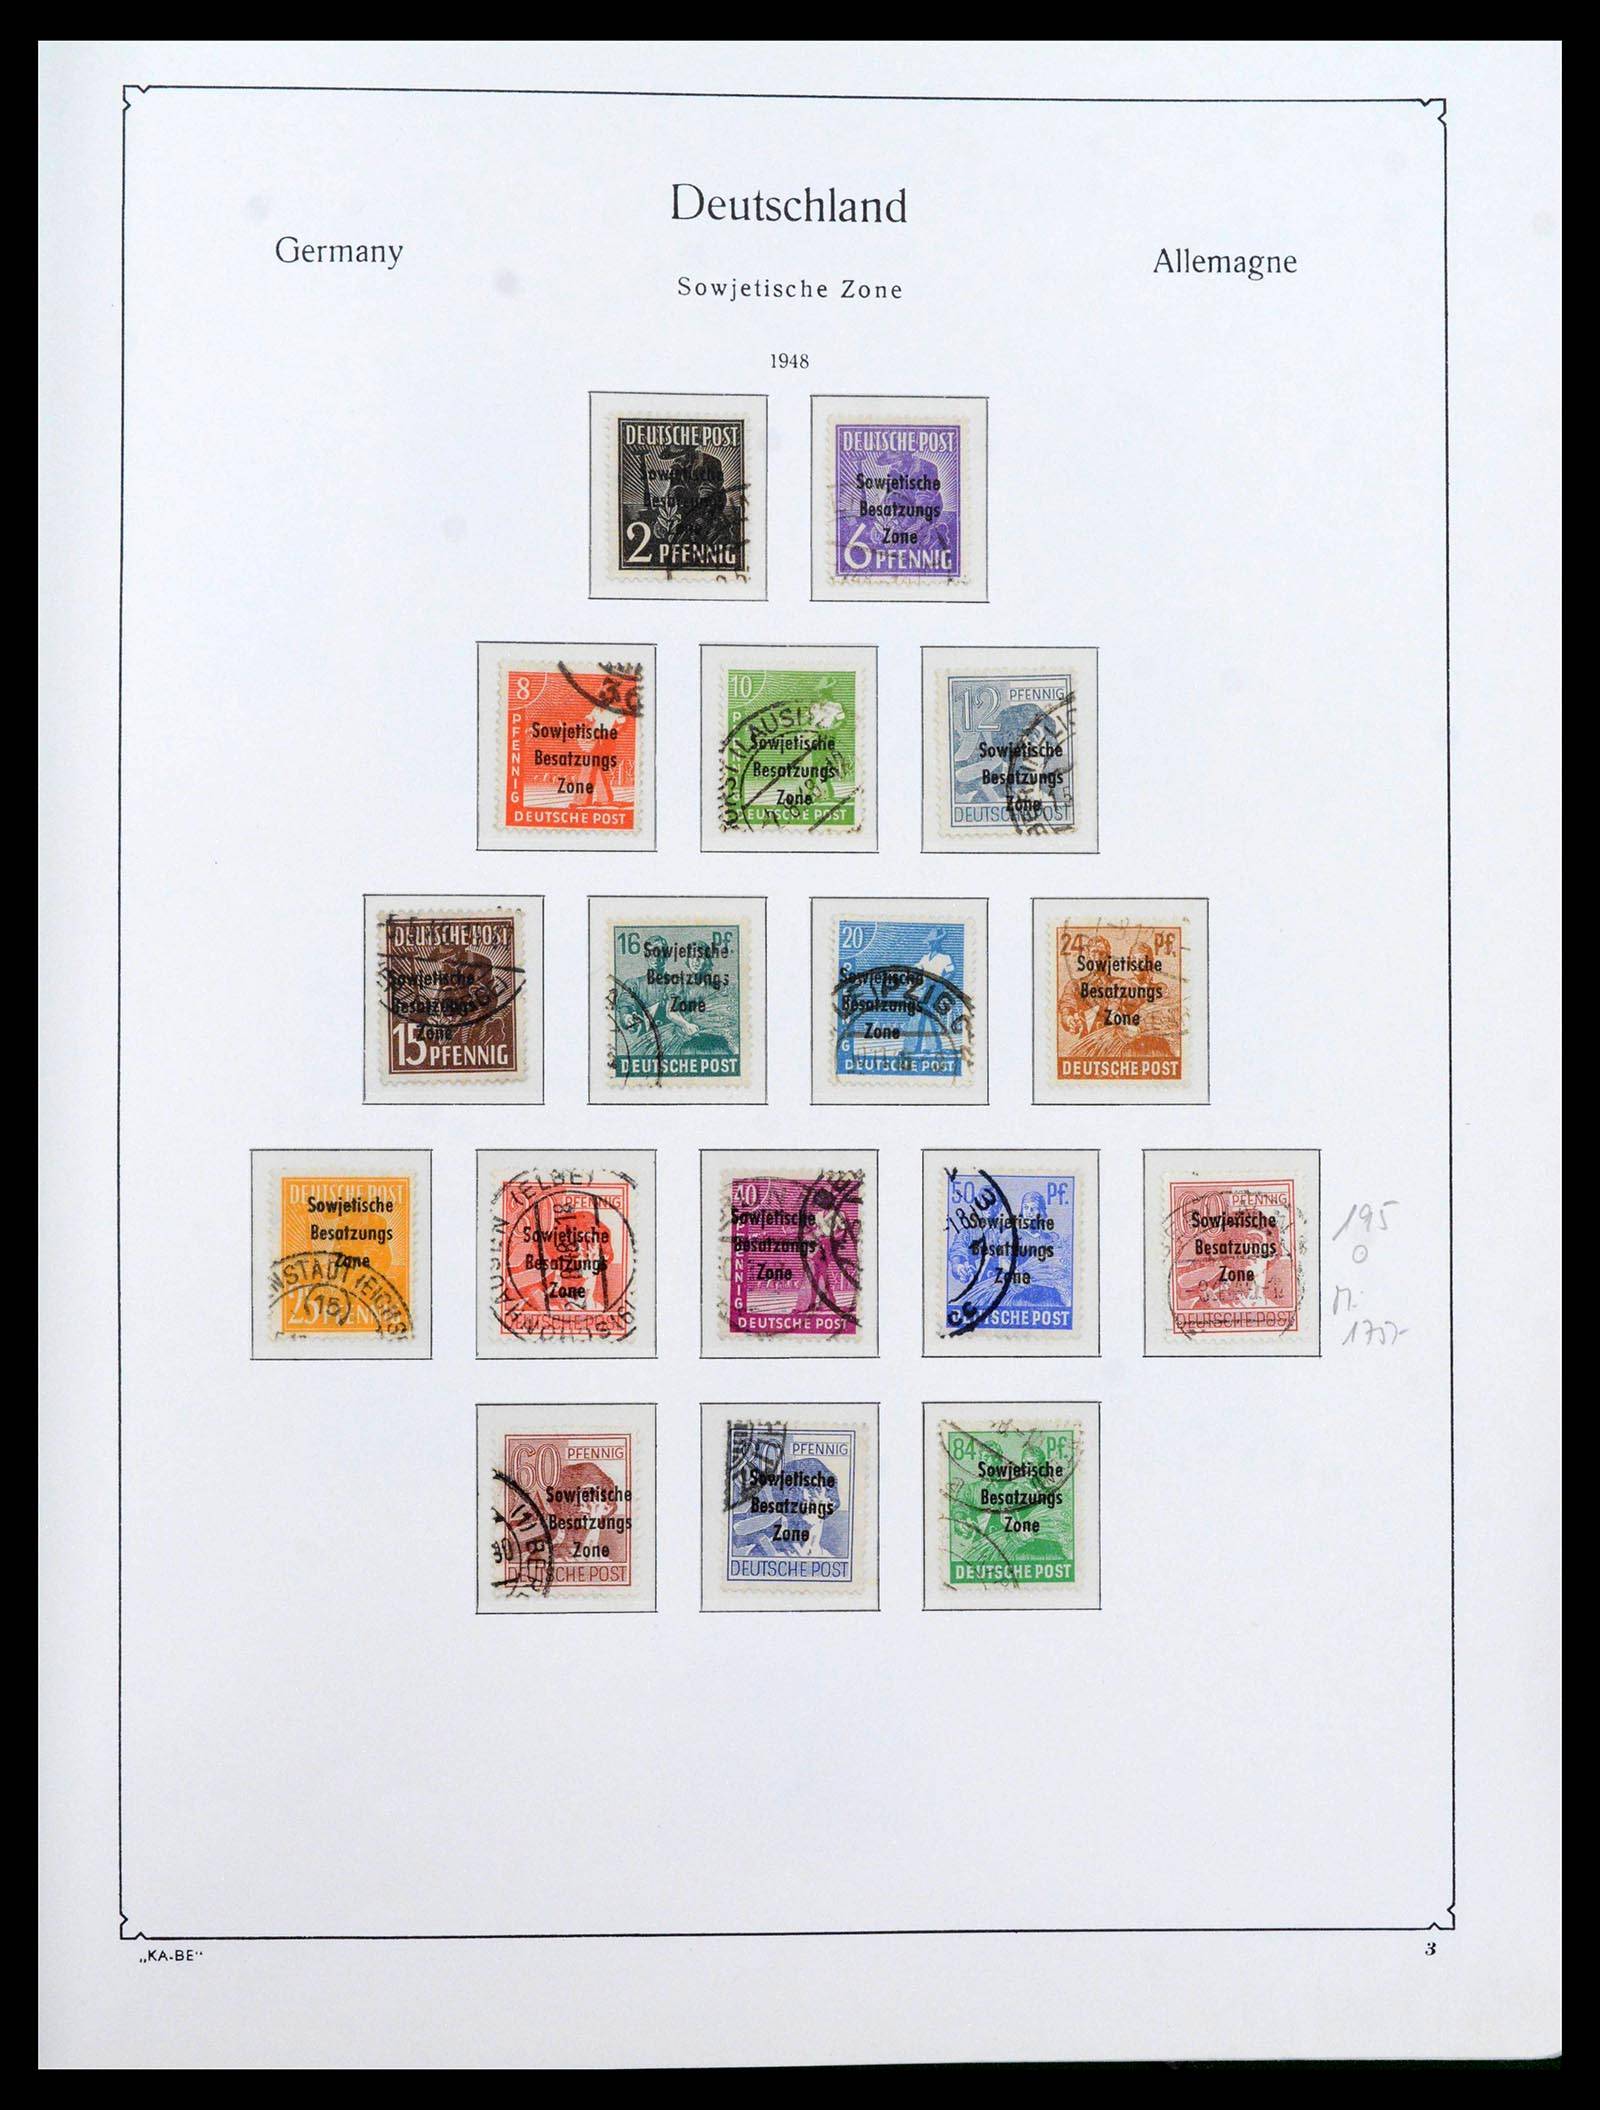 39377 0026 - Stamp collection 39377 Soviet Zone 1945-1948.